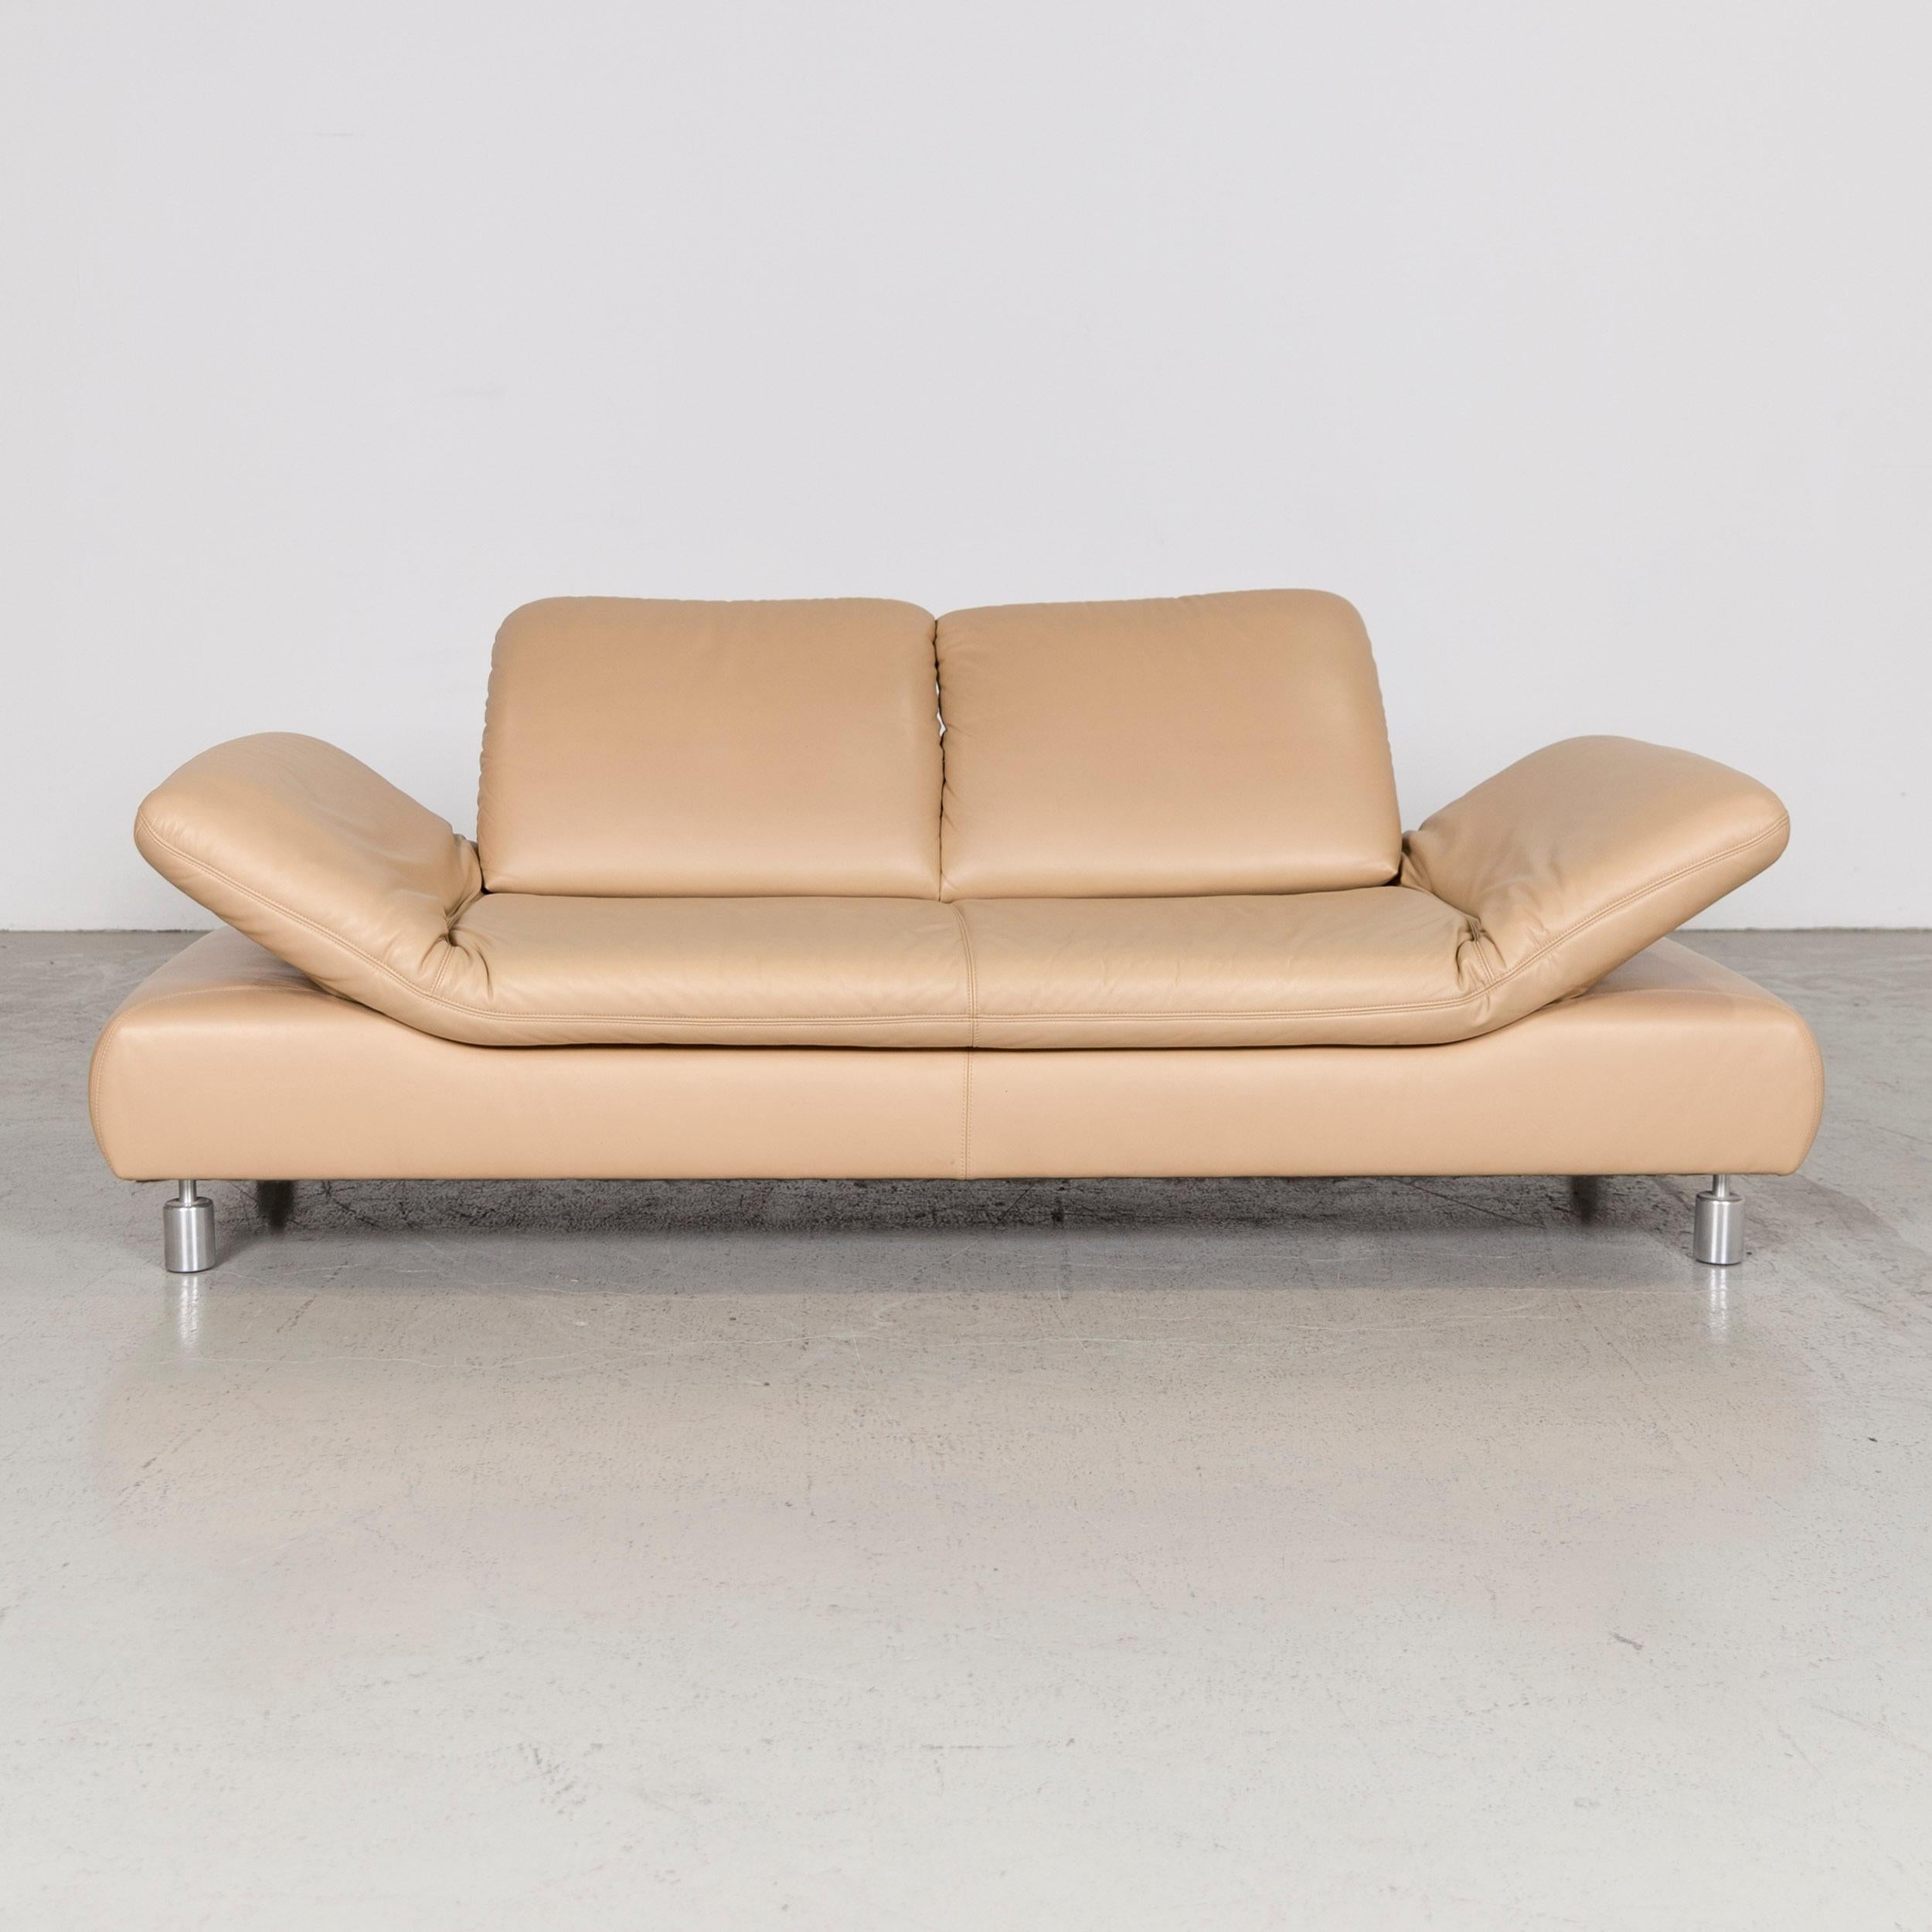 German Koinor Rivoli Designer Leather Sofa Beige Genuine Leather Three-Seat Couch For Sale